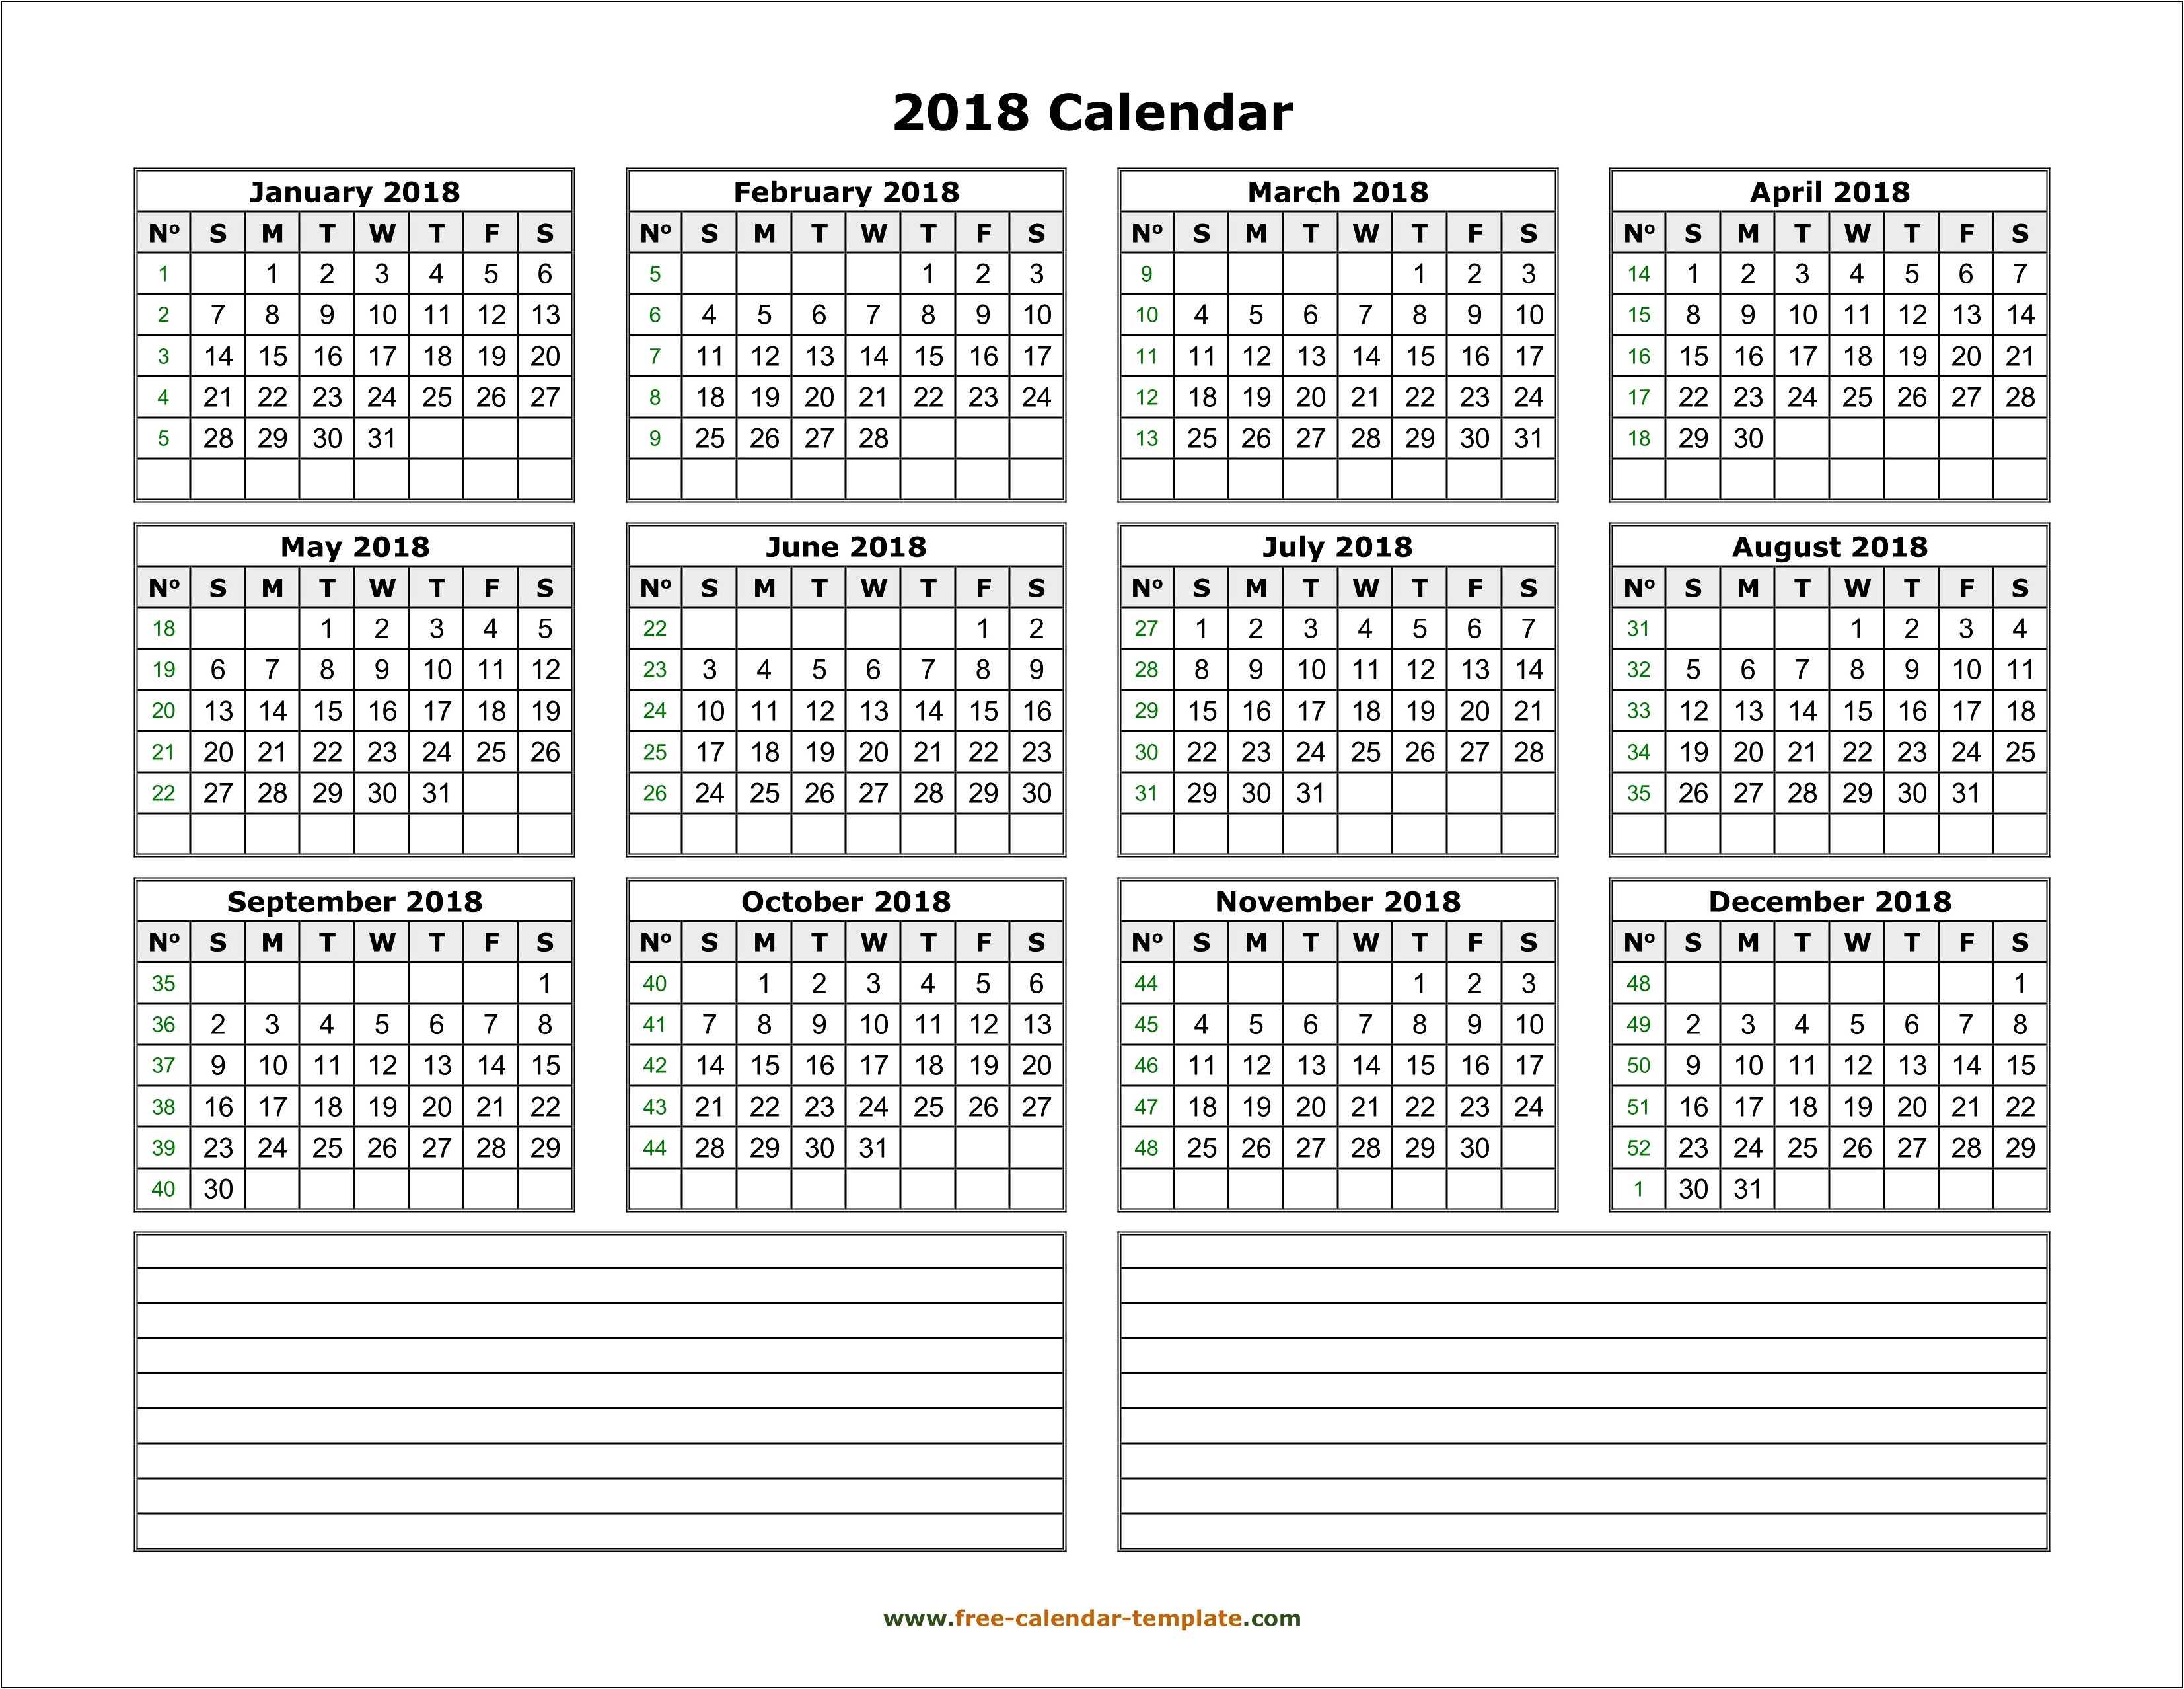 Free Calendar Template 2018 No Downloading